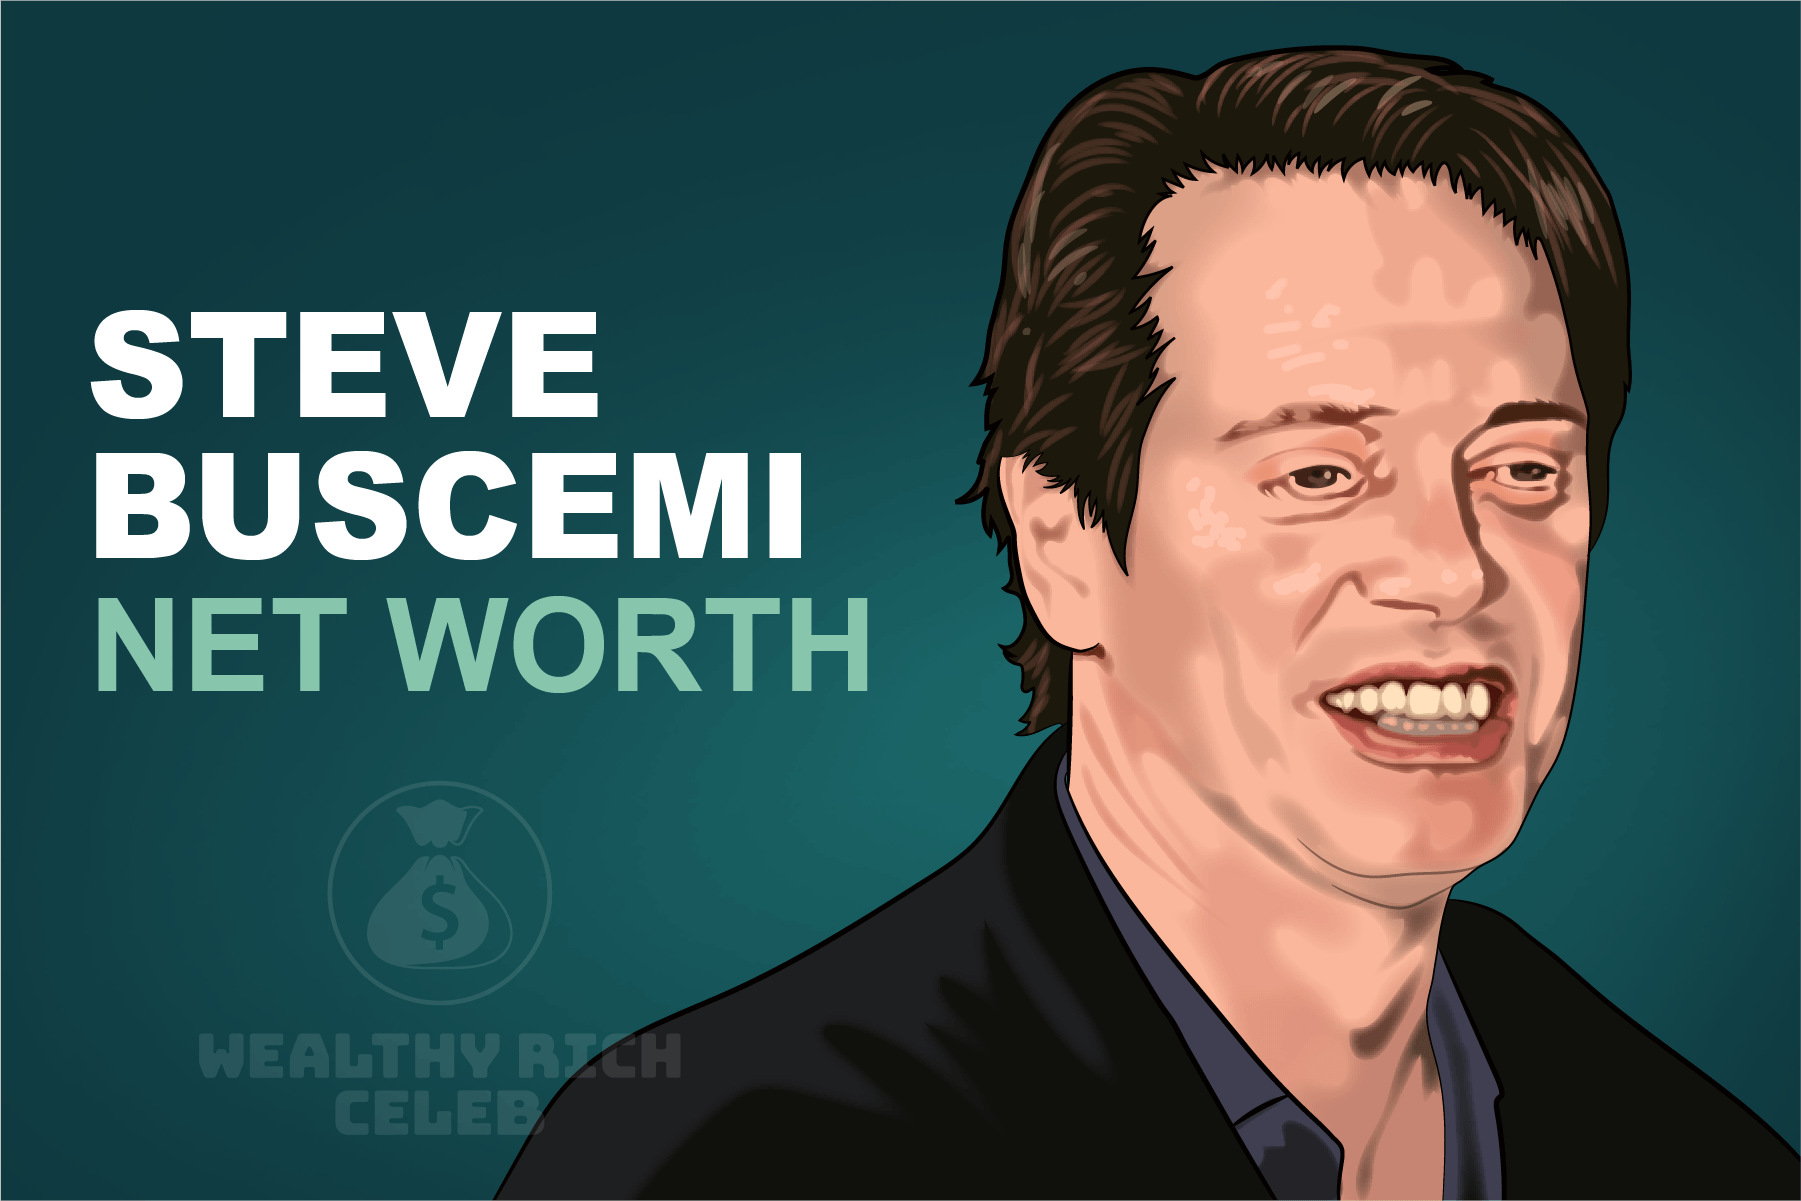 Steve Buscemi net worth